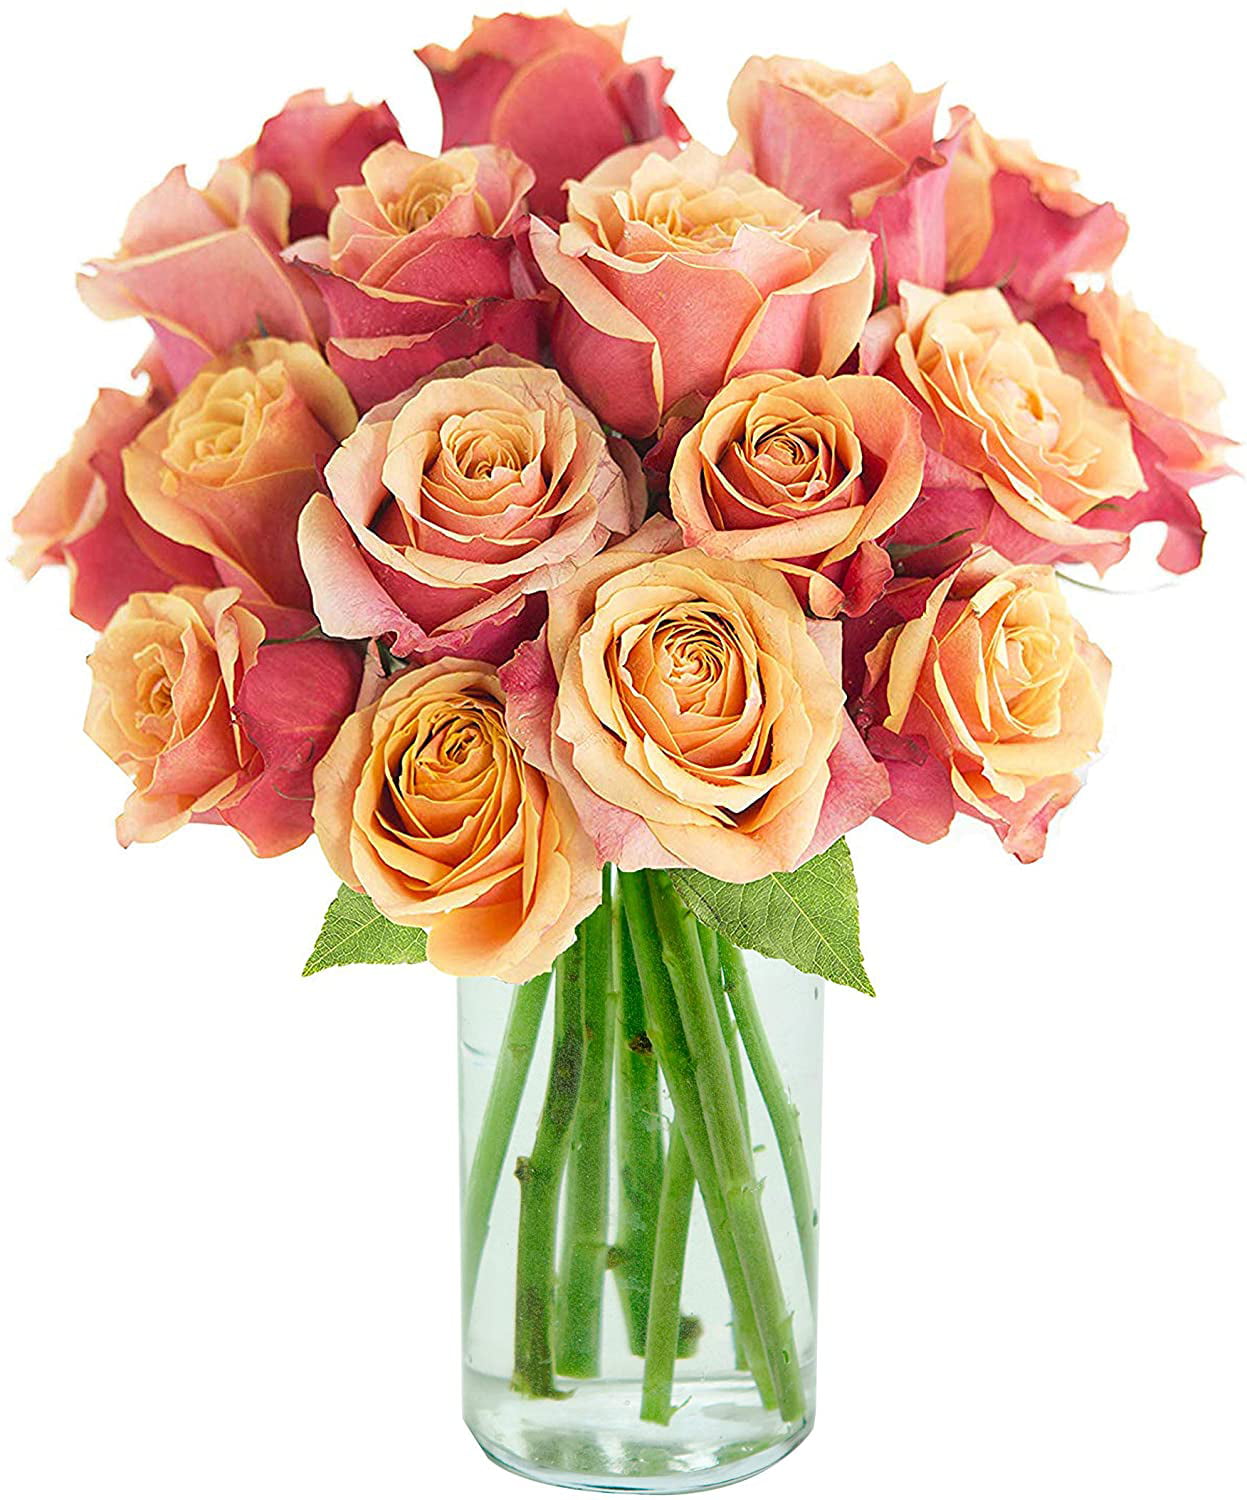 Arabella Farm Direct Bouquet Of 18 Fresh Cut Orange Roses With A Free